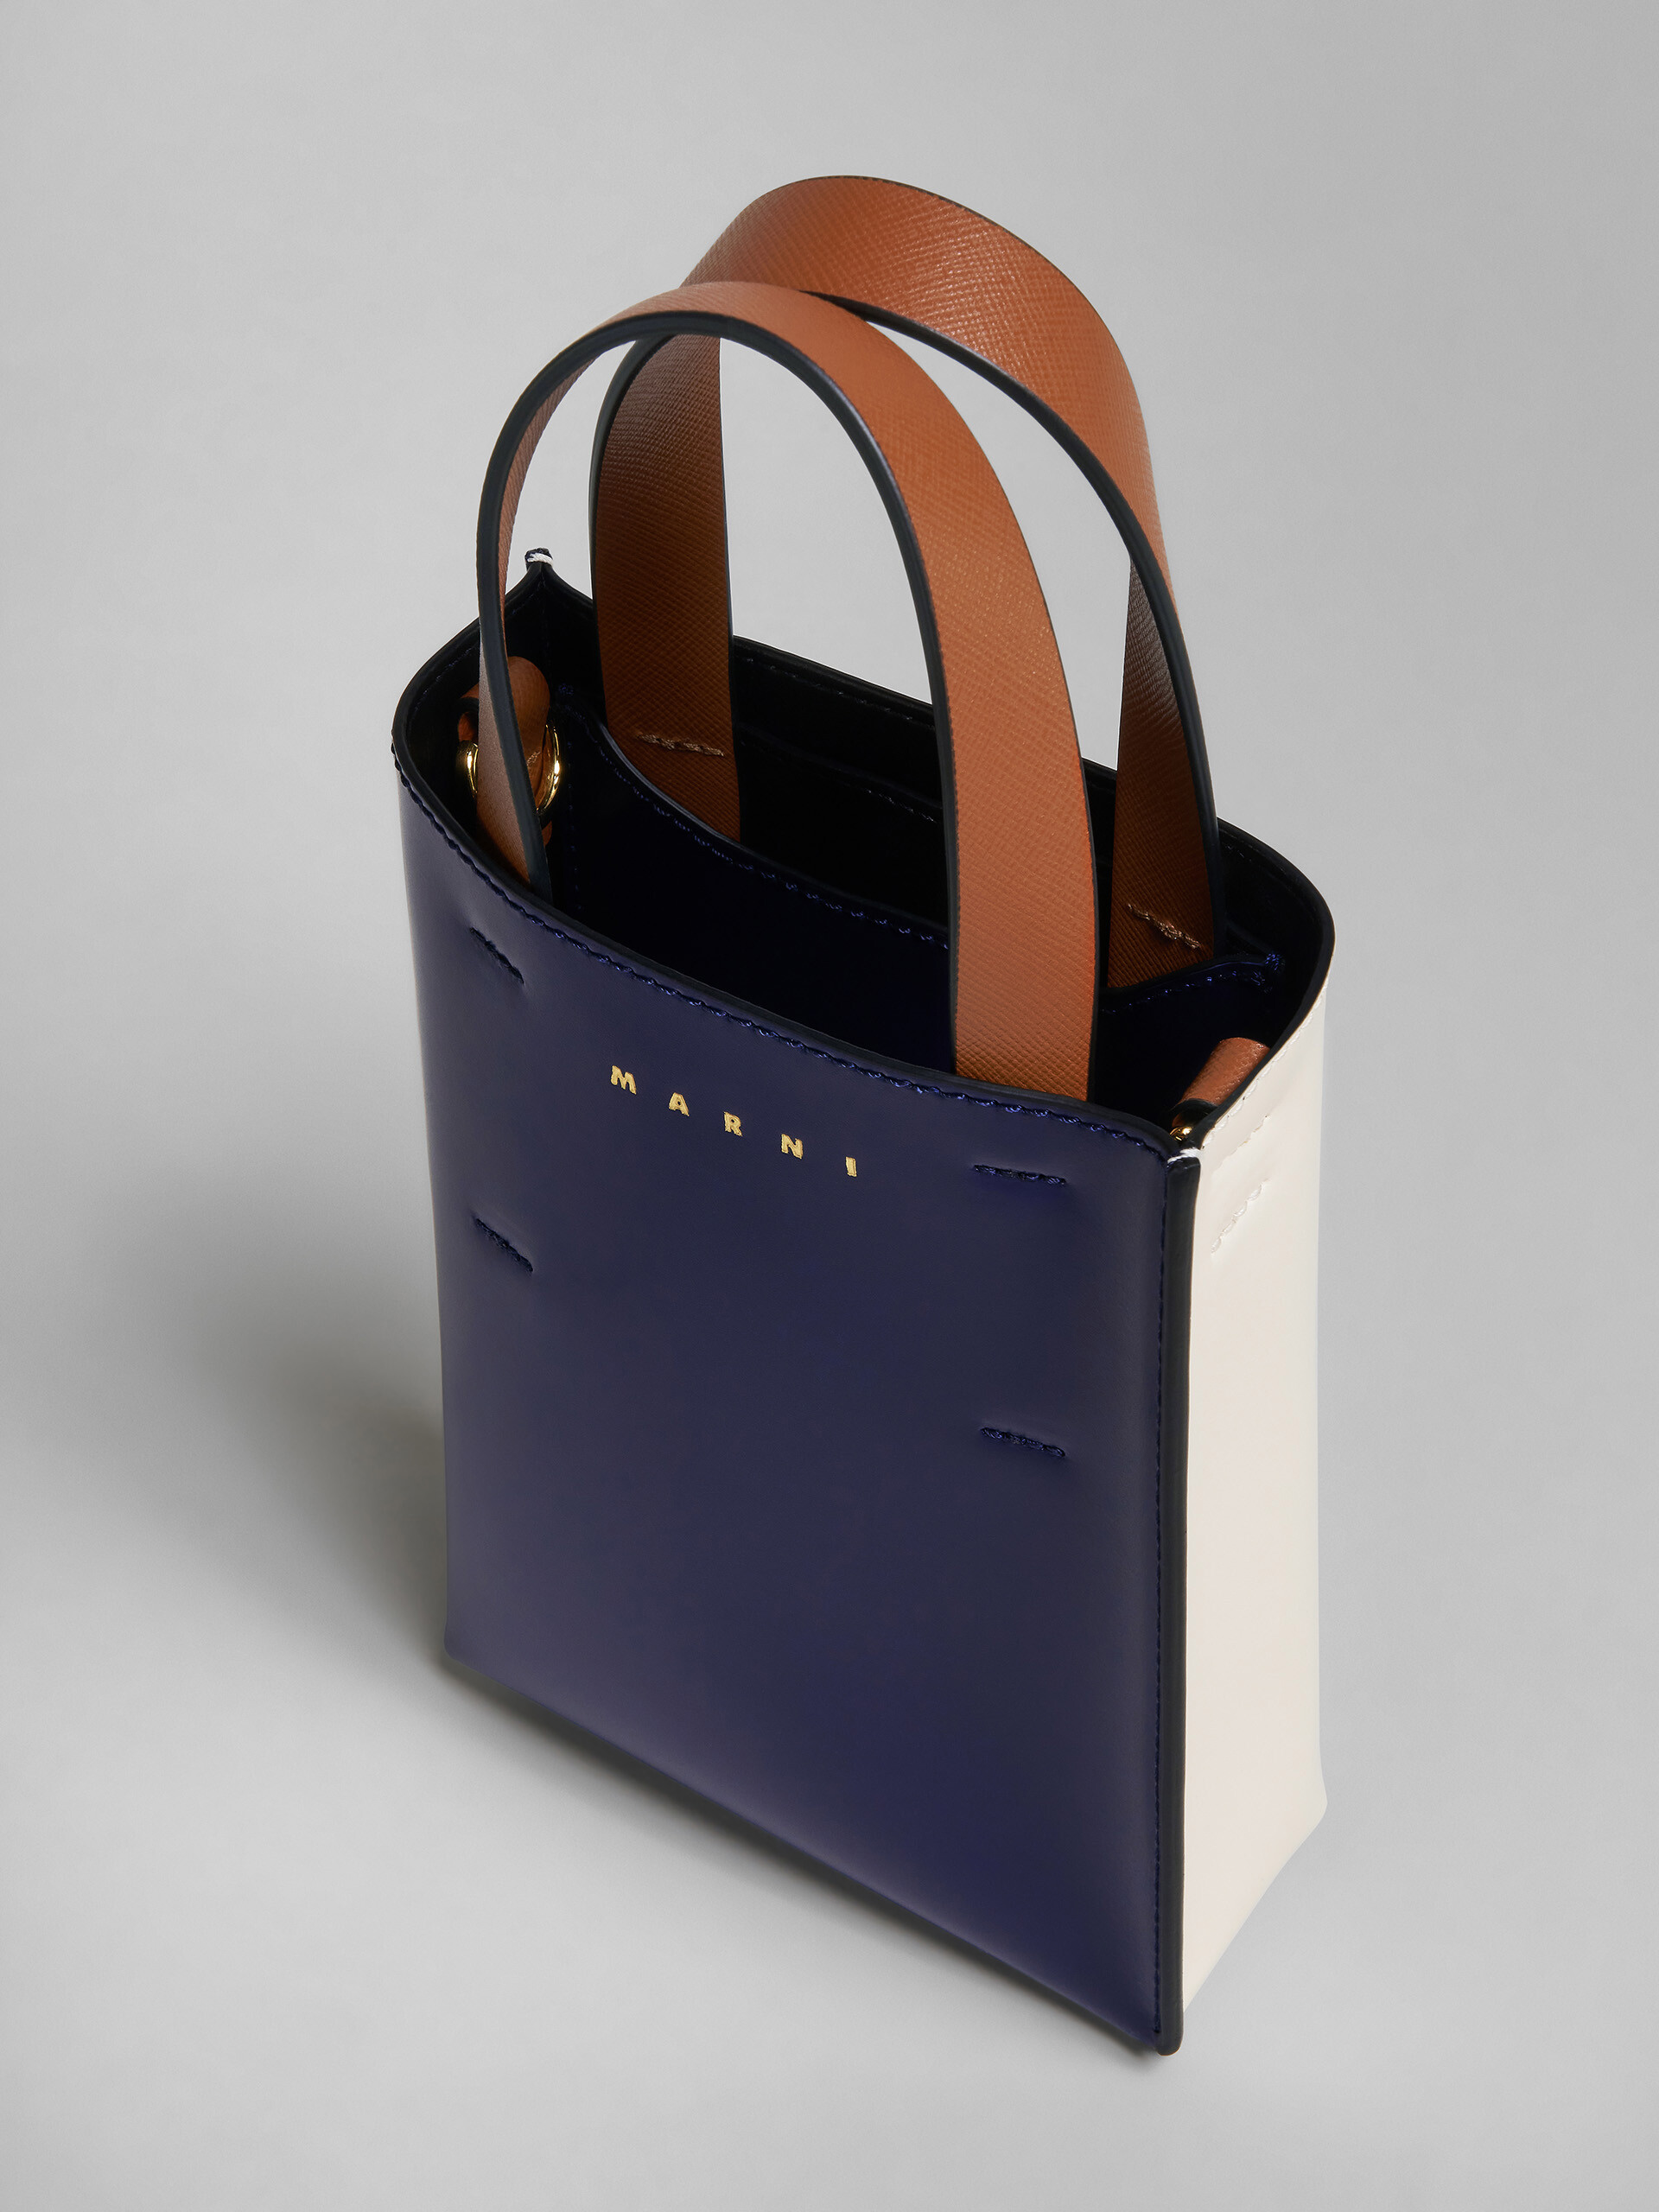 MUSEO bag nano in pelle blu e bianca - Borse shopping - Image 4